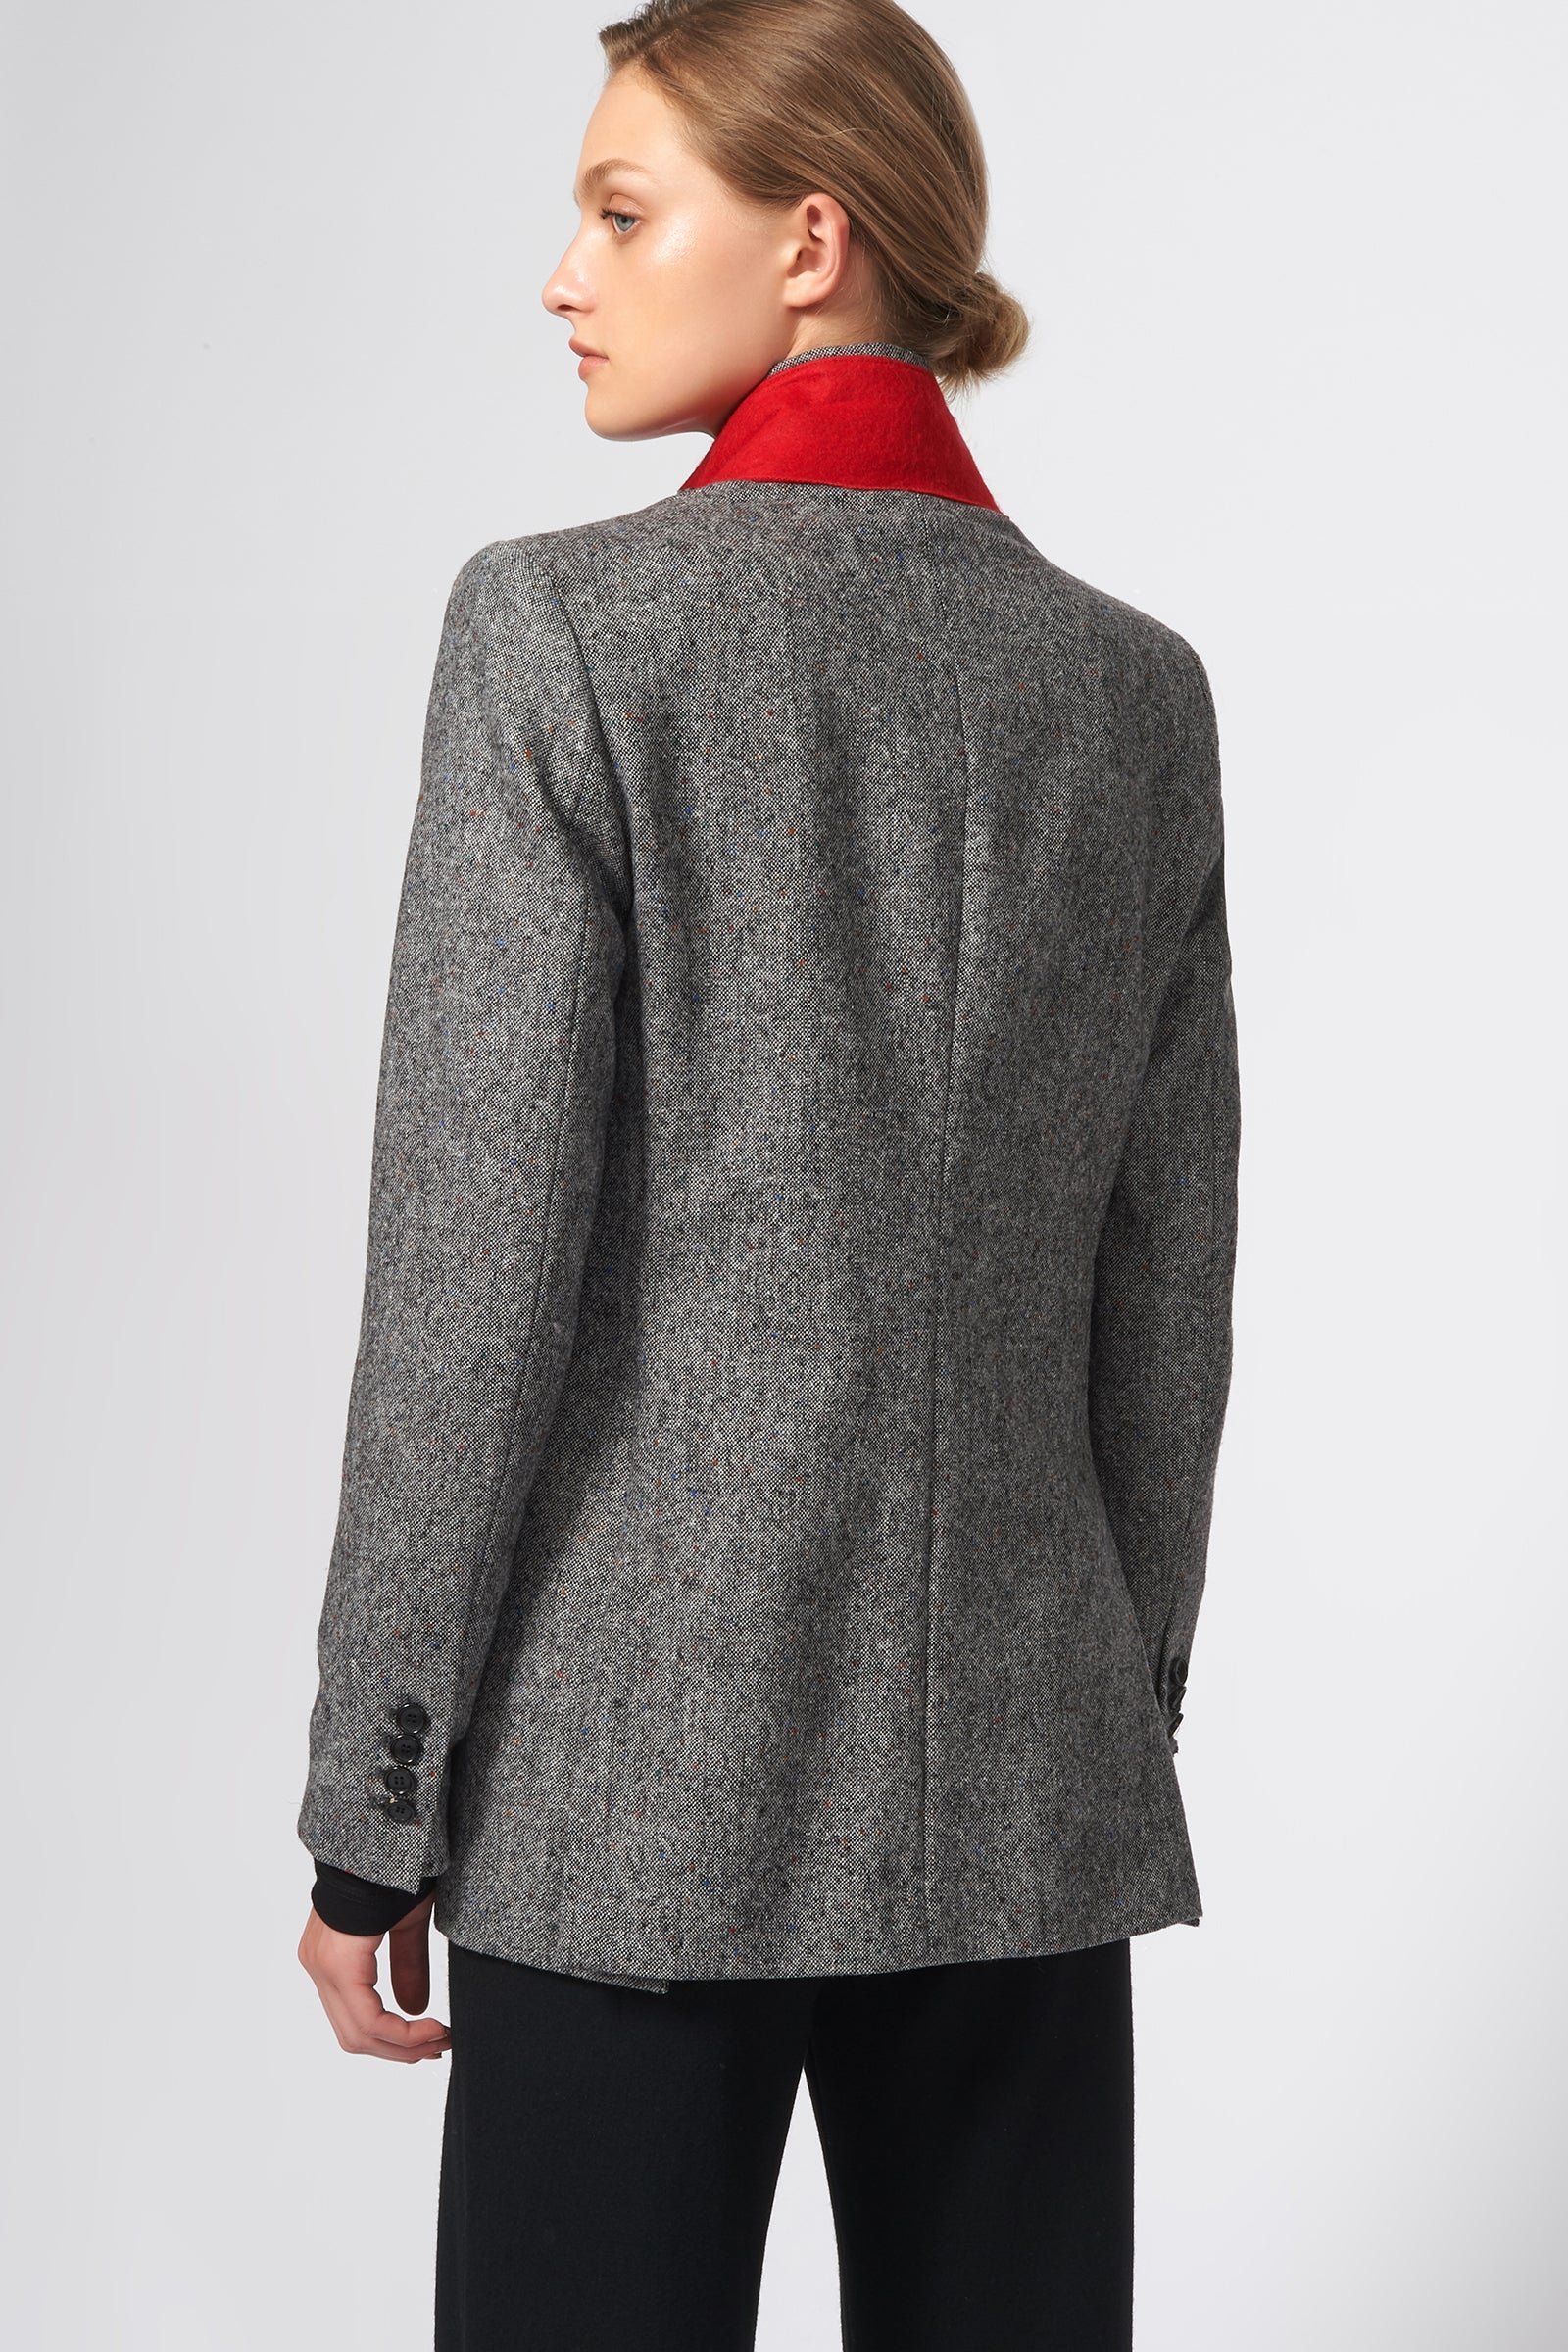 Kal Rieman Classic Notch Blazer in Grey Tweed on Model Back View